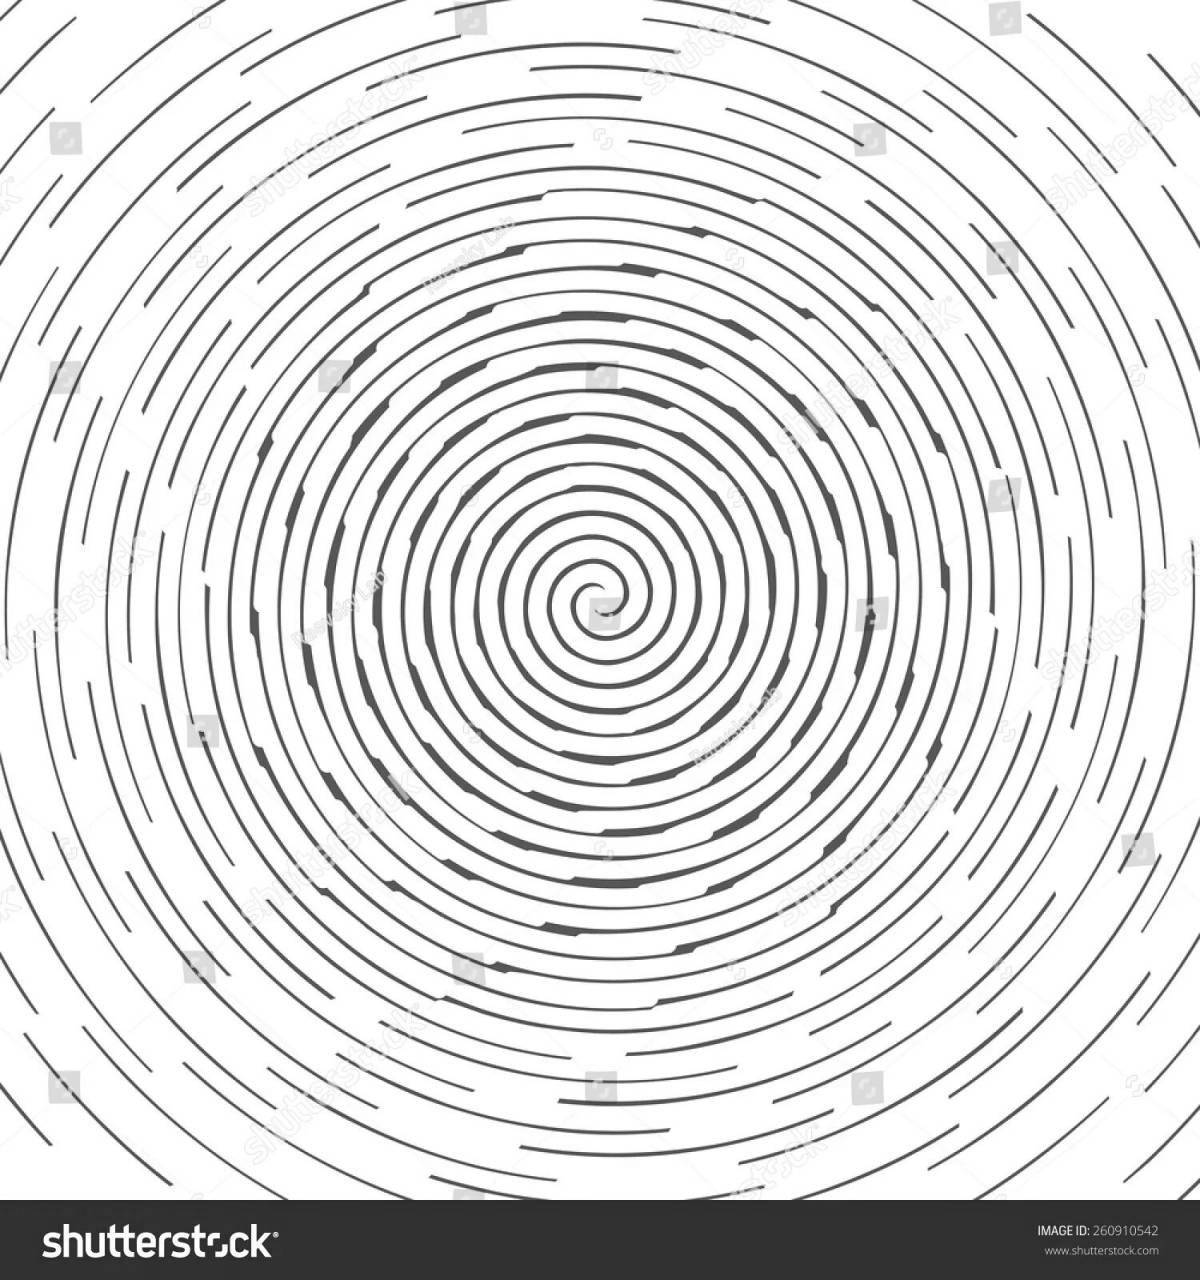 Shock circle spiral coloring page